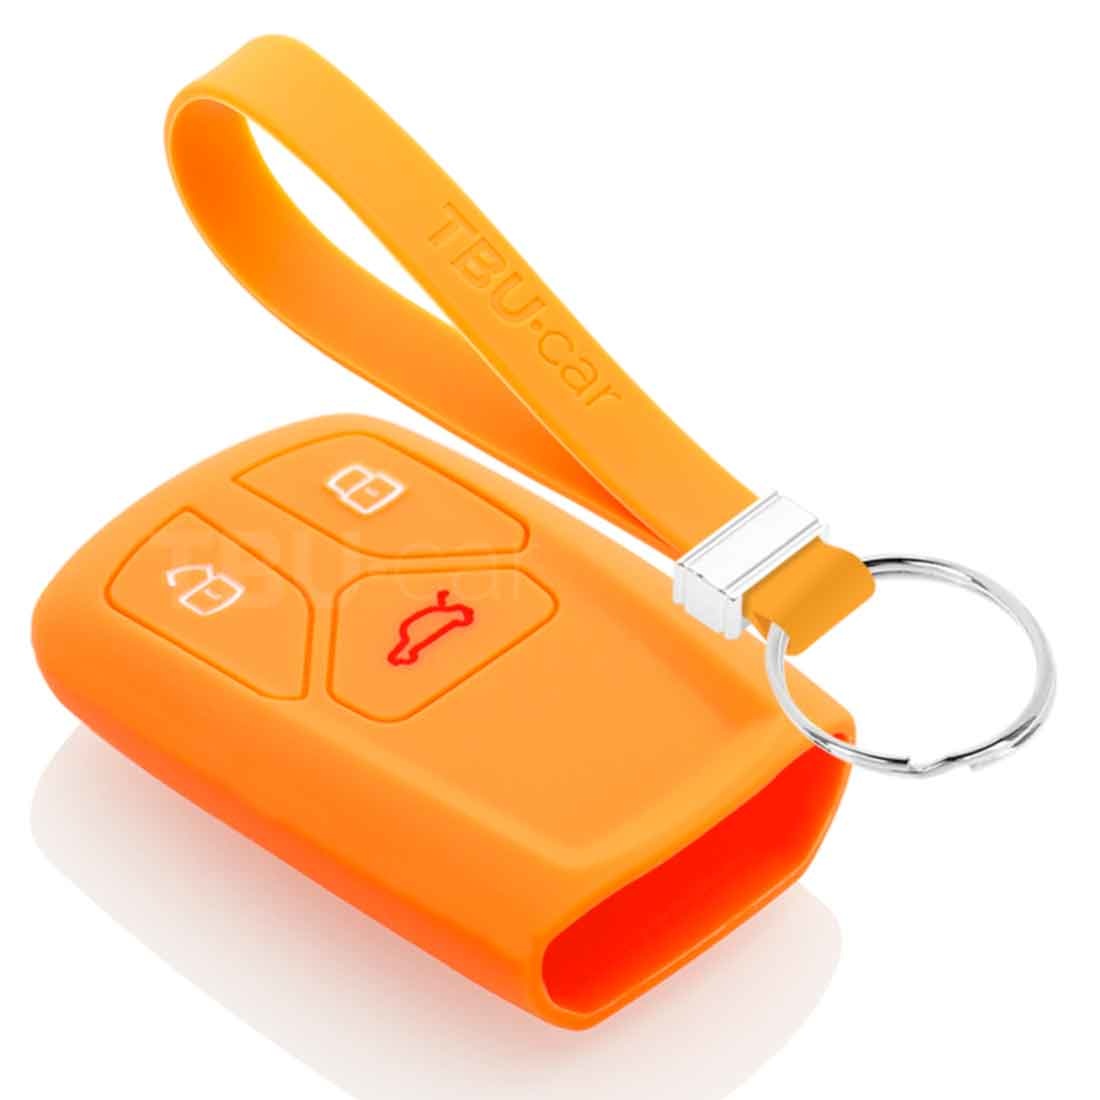 TBU car TBU car Car key cover compatible with Audi - Silicone Protective Remote Key Shell - FOB Case Cover - Orange